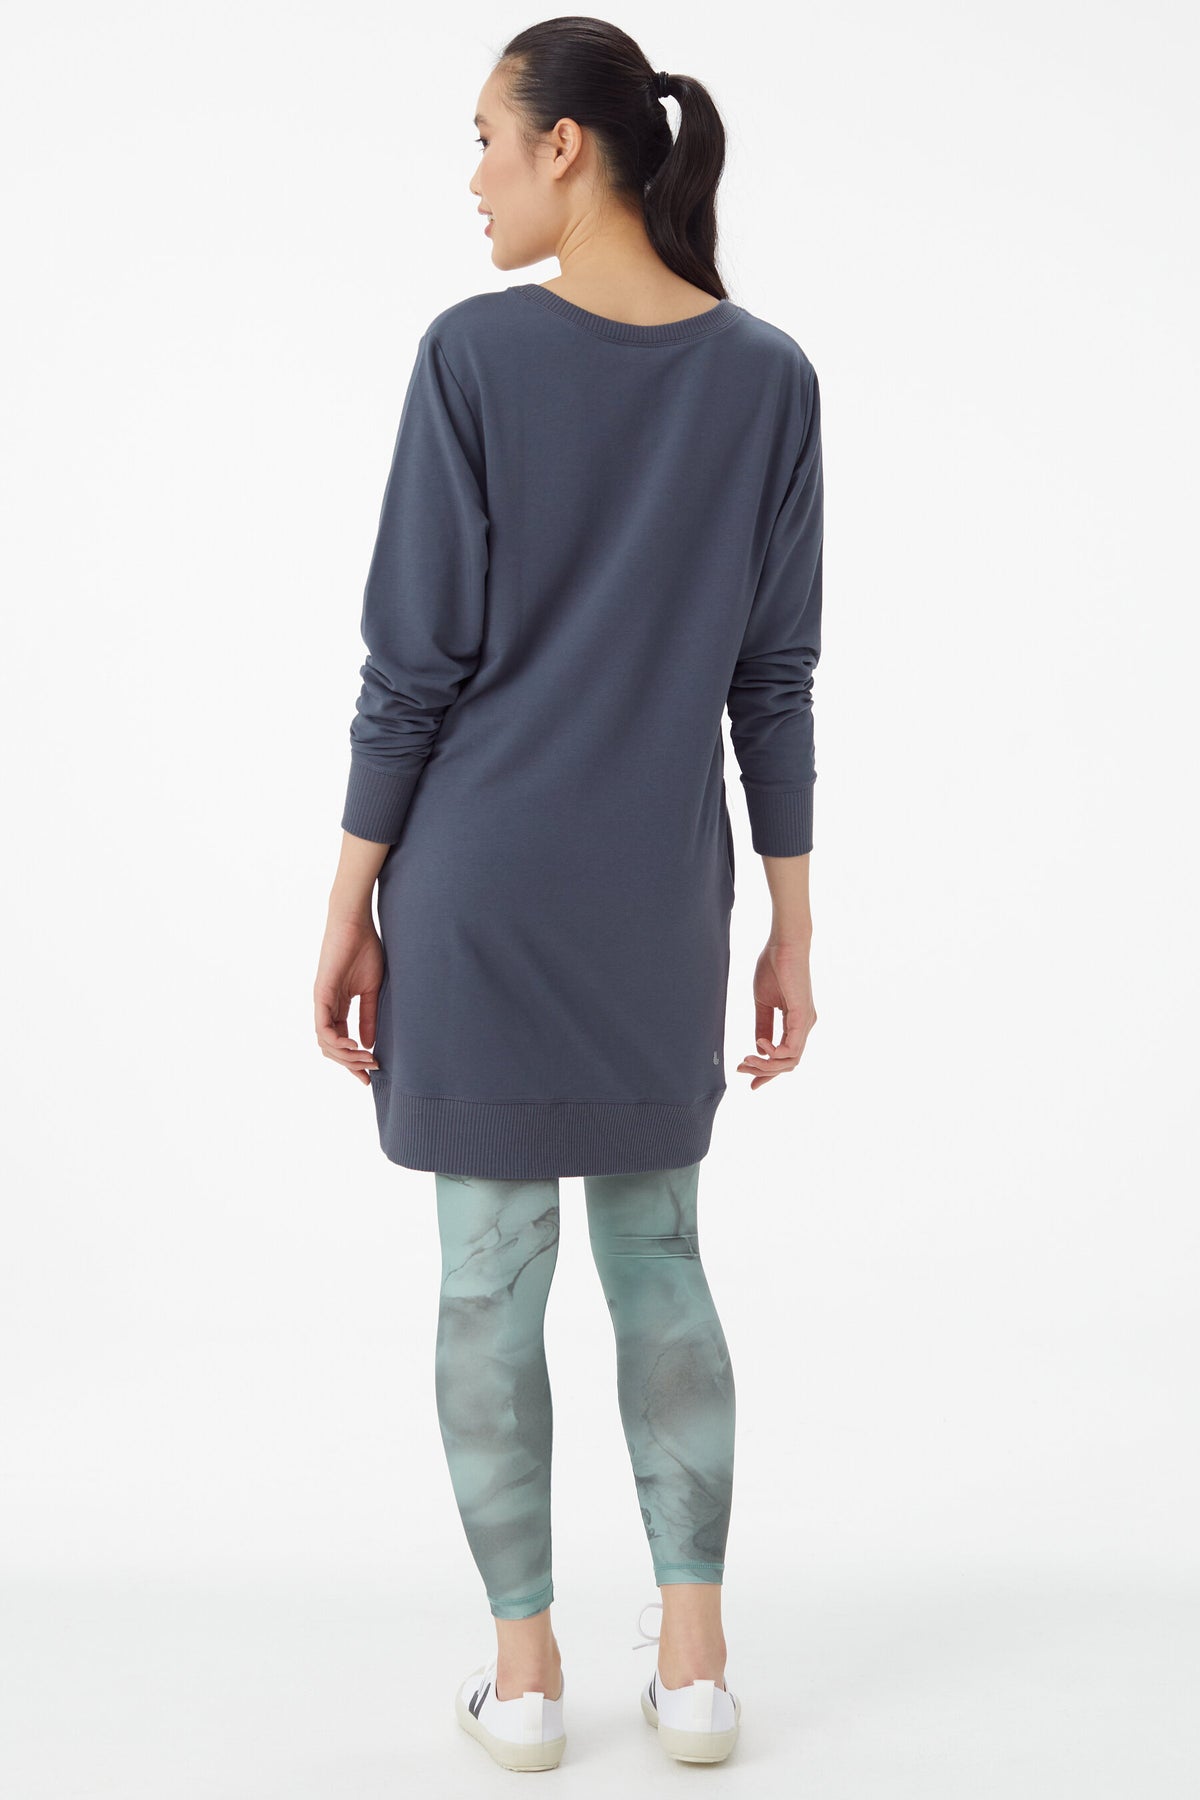 Flat Track Long Sleeve Sweatshirt Dress, Women's Clothing